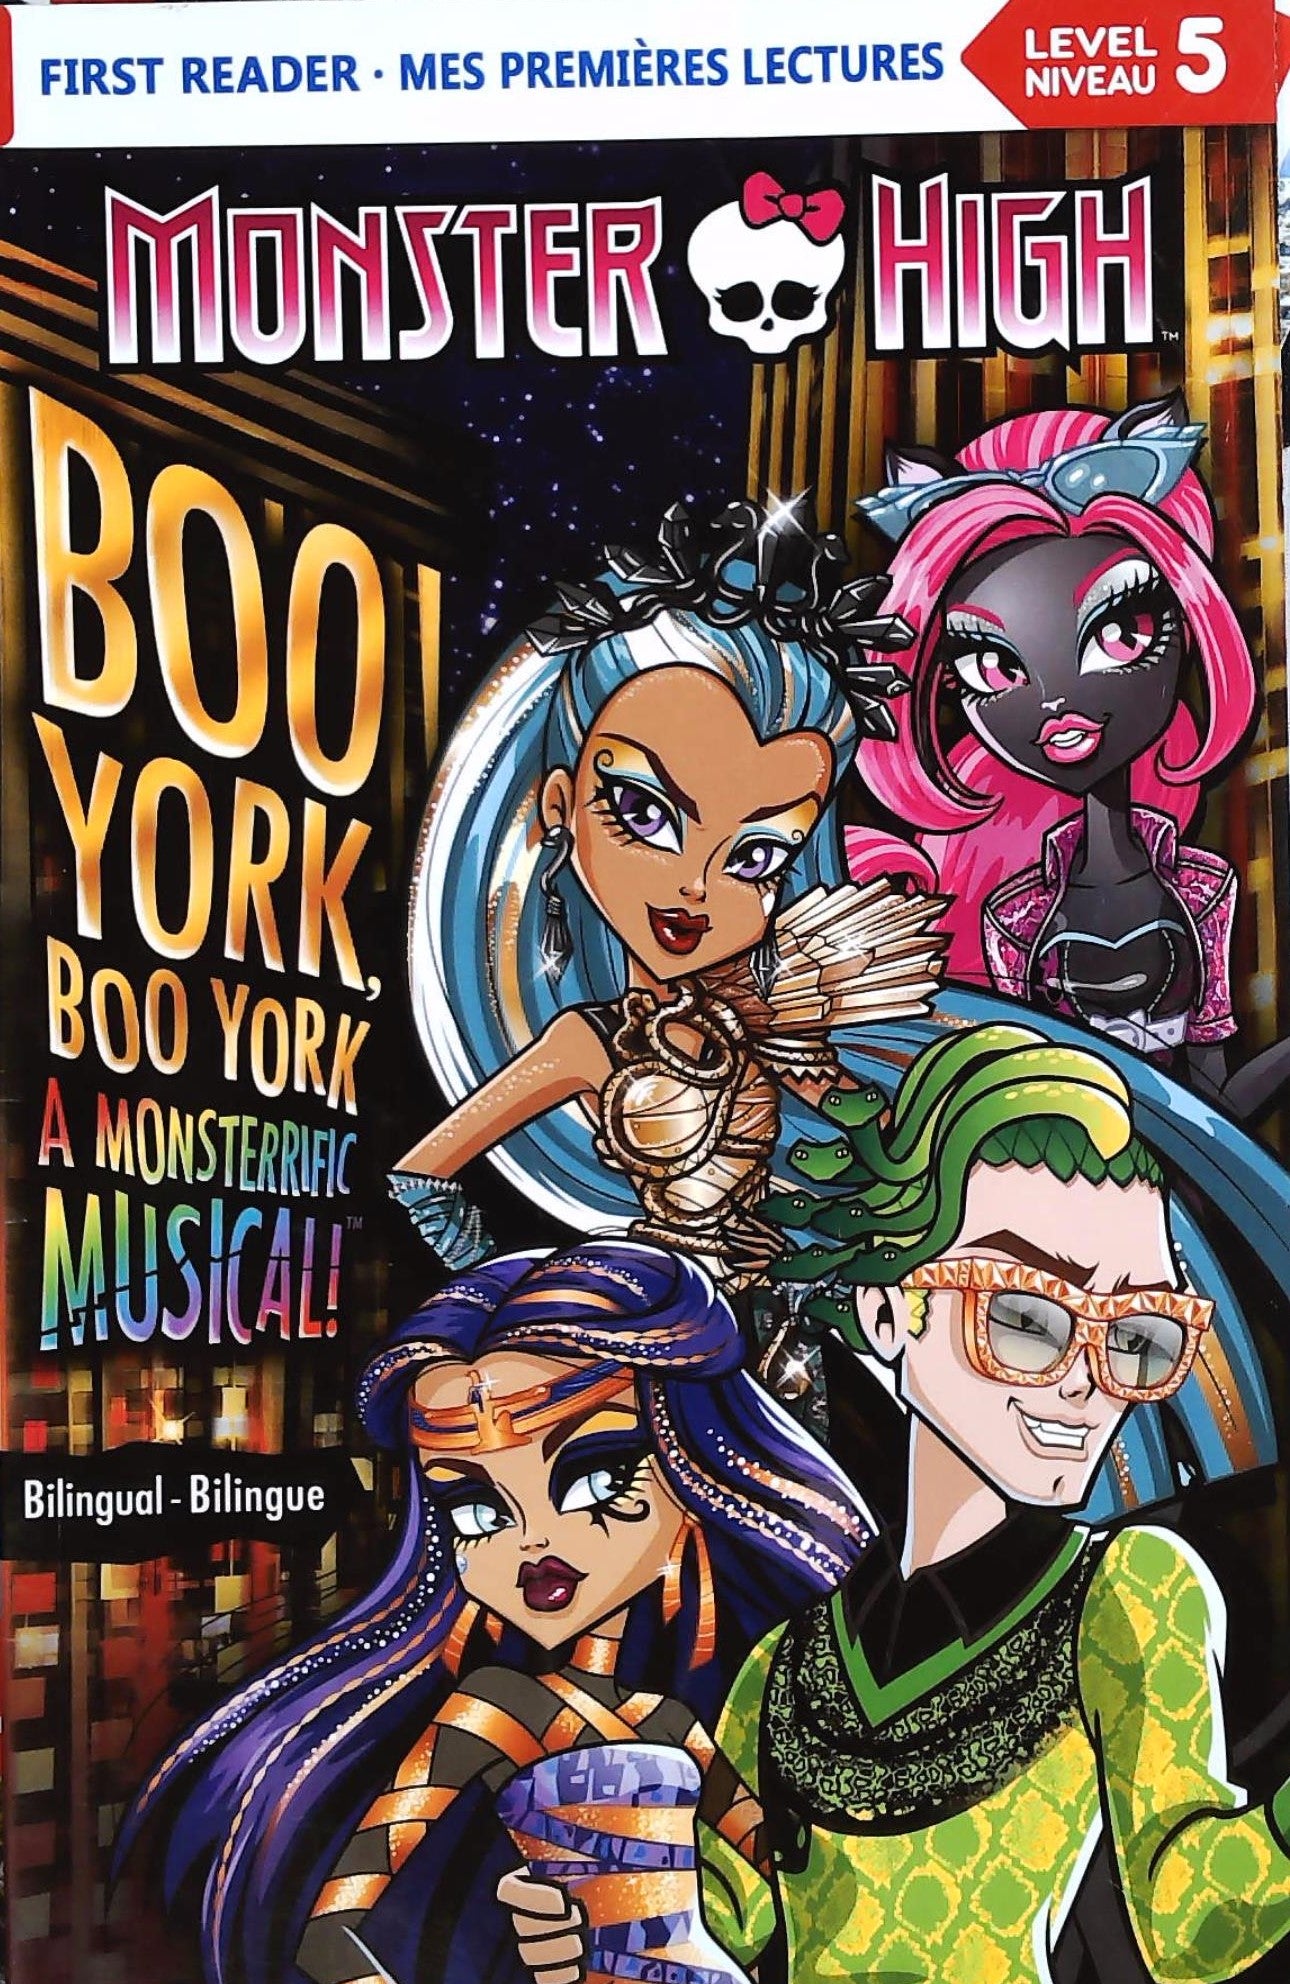 Livre ISBN 2897137460 Monster High : Boo York Boo York a Monsterrific Musical - Bilingue